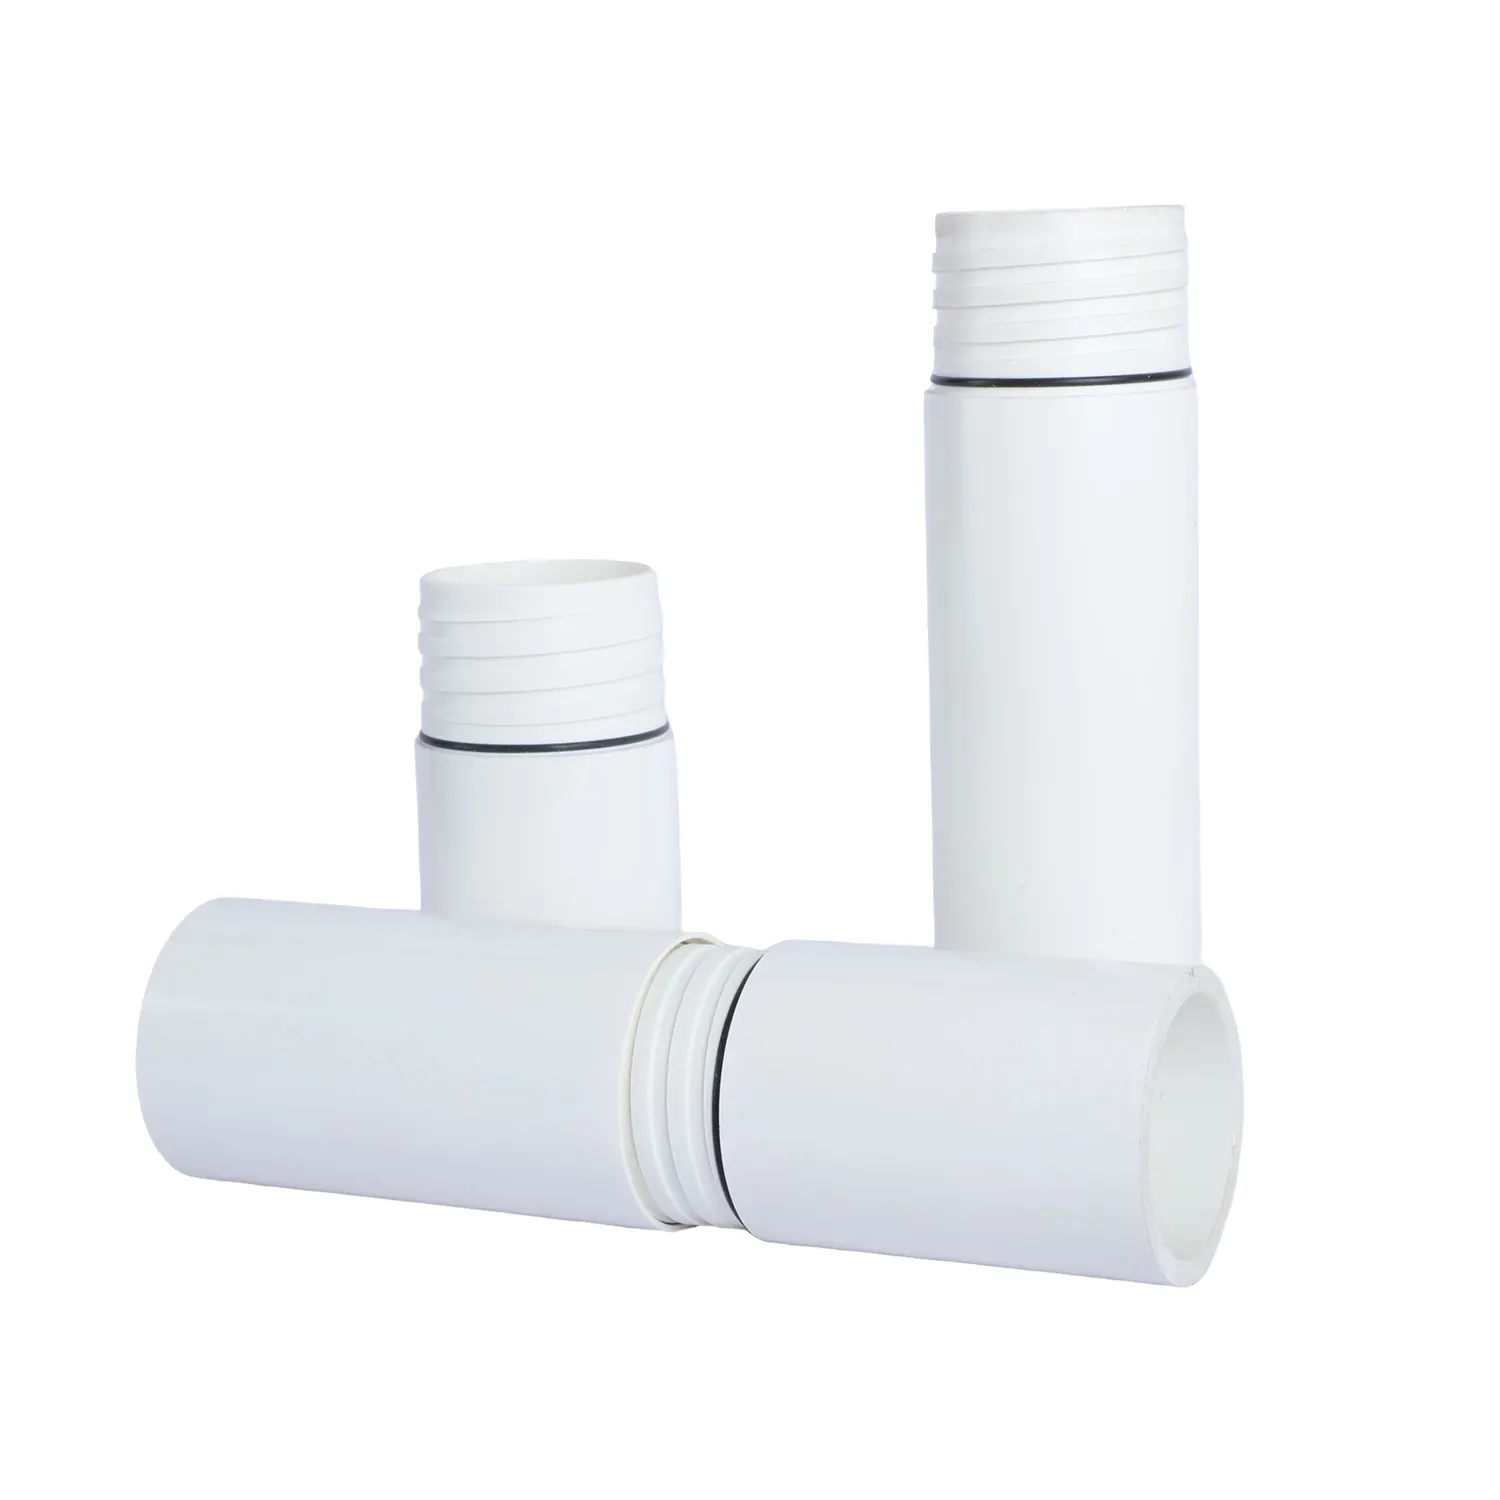 Tubos de revestimiento de pozo profundo UPVC de alta calidad para suministro de agua tubo de revestimiento de PVC tubo de revestimiento de pozo de PVC profundo